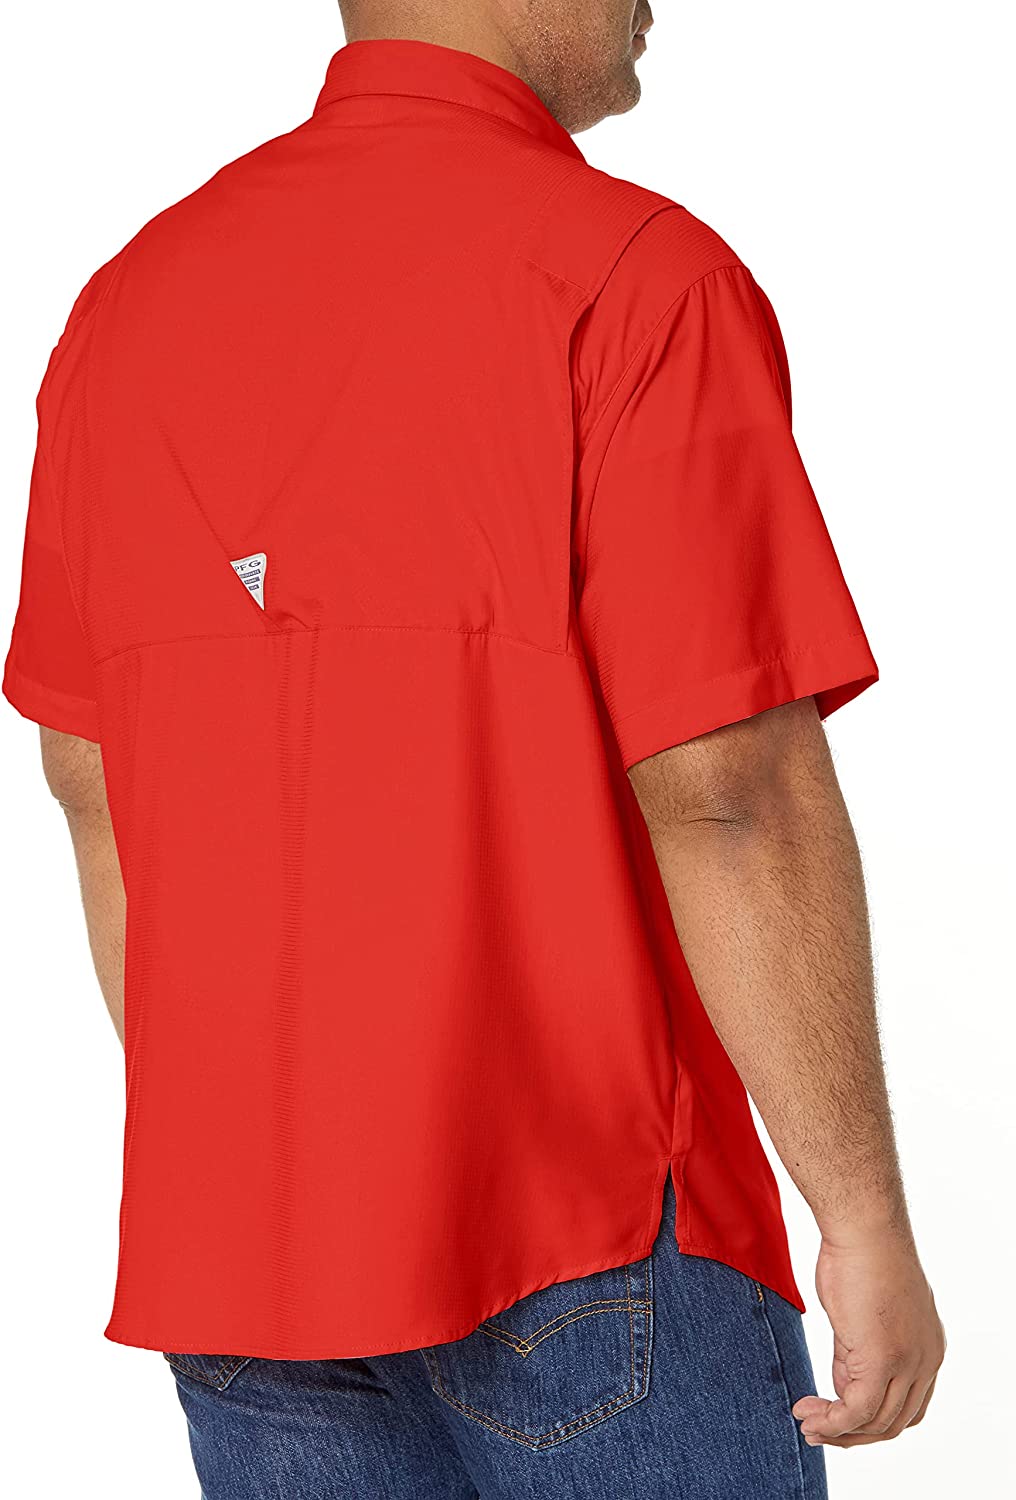 Mens PFG Tamiami II Short Sleeve Shirt - image 2 of 12